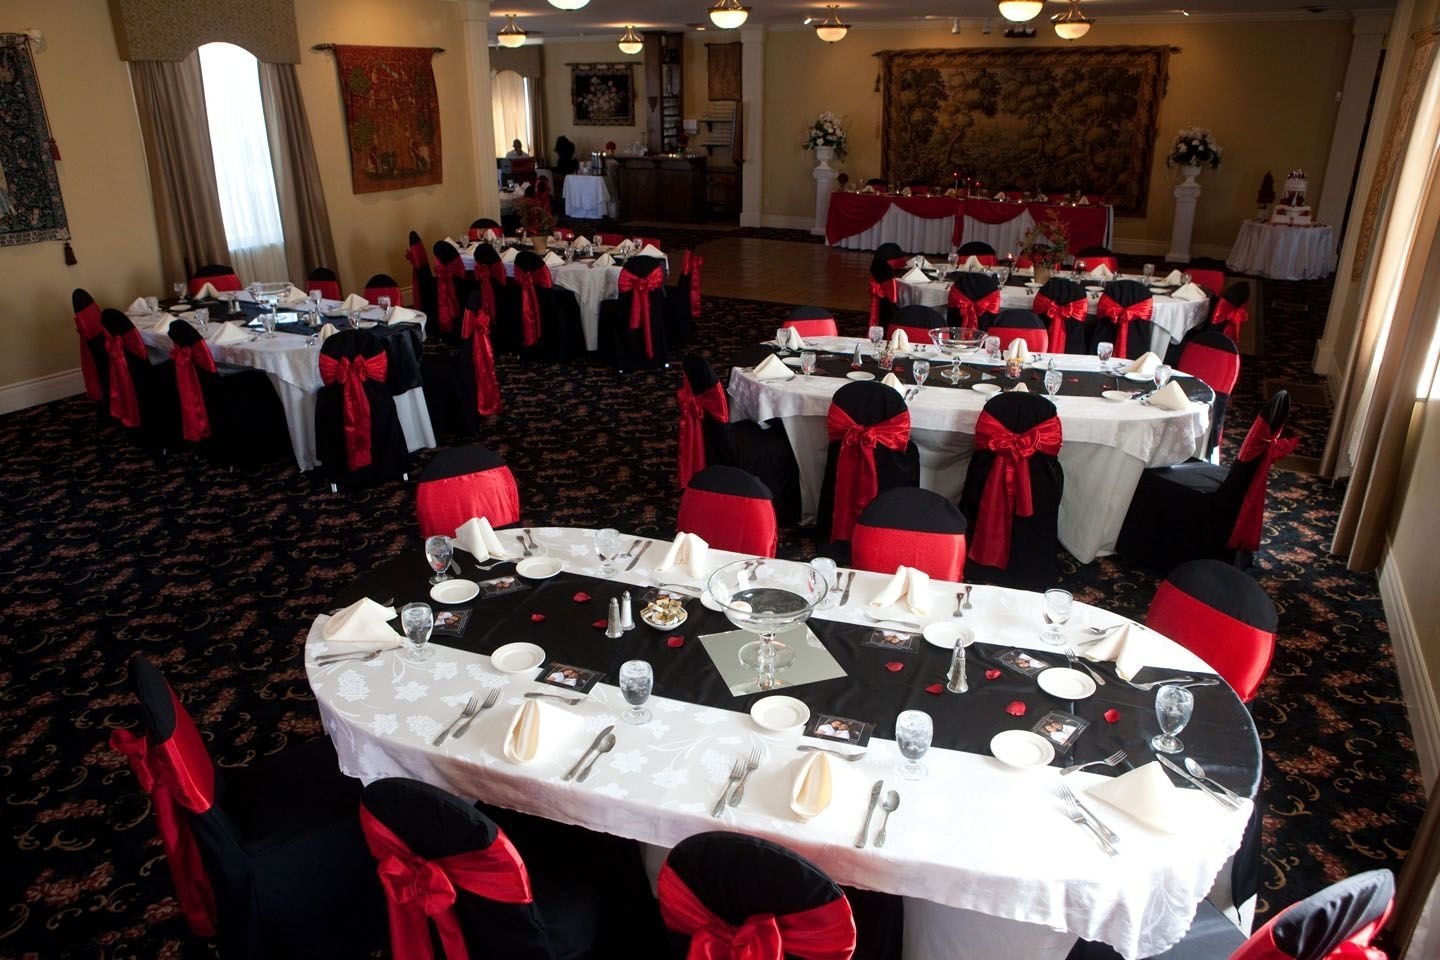 10 Nice Black White And Red Wedding Ideas red white and black table settings red wedding decorations dark 1 2022